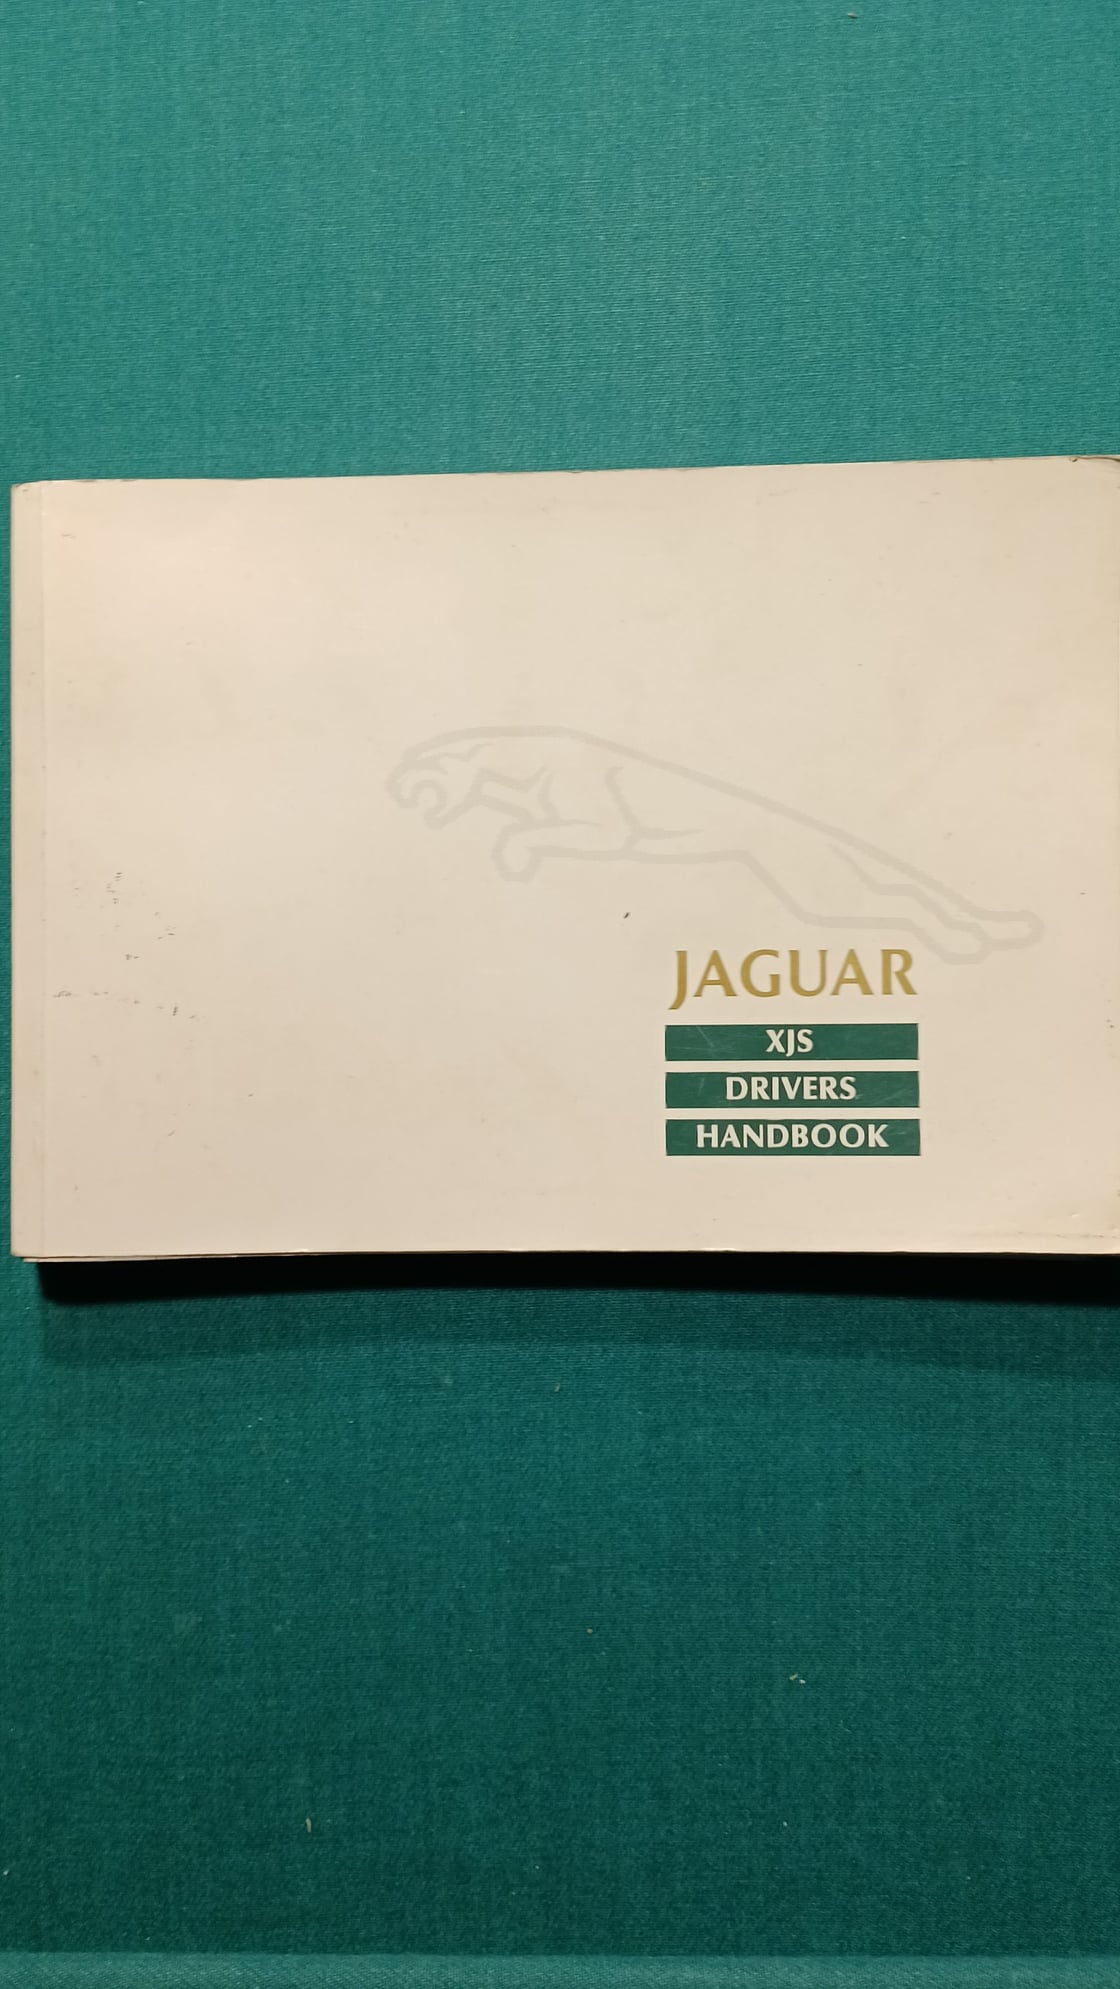 Miscellaneous - Jaguar XJS pre face lift owners manual. - Used - 1977 to 1991 Jaguar XJS - Saluda, NC 28773, United States